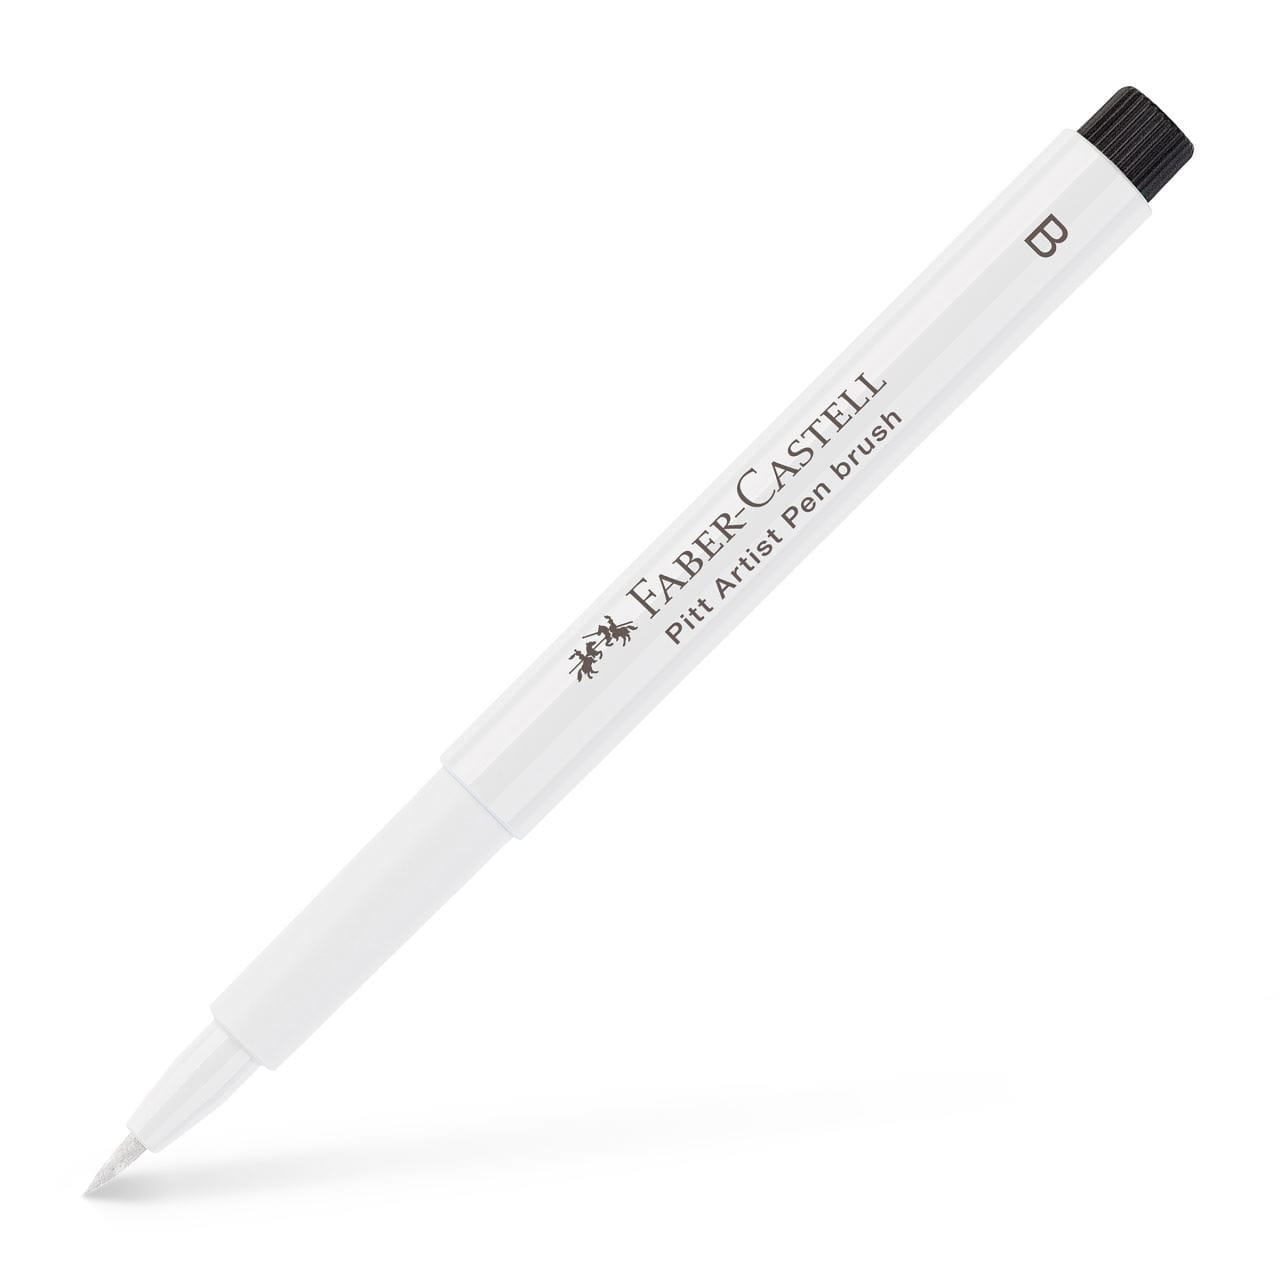 Faber-Castell - Rotulador Pitt Artist Pen Brush, blanco